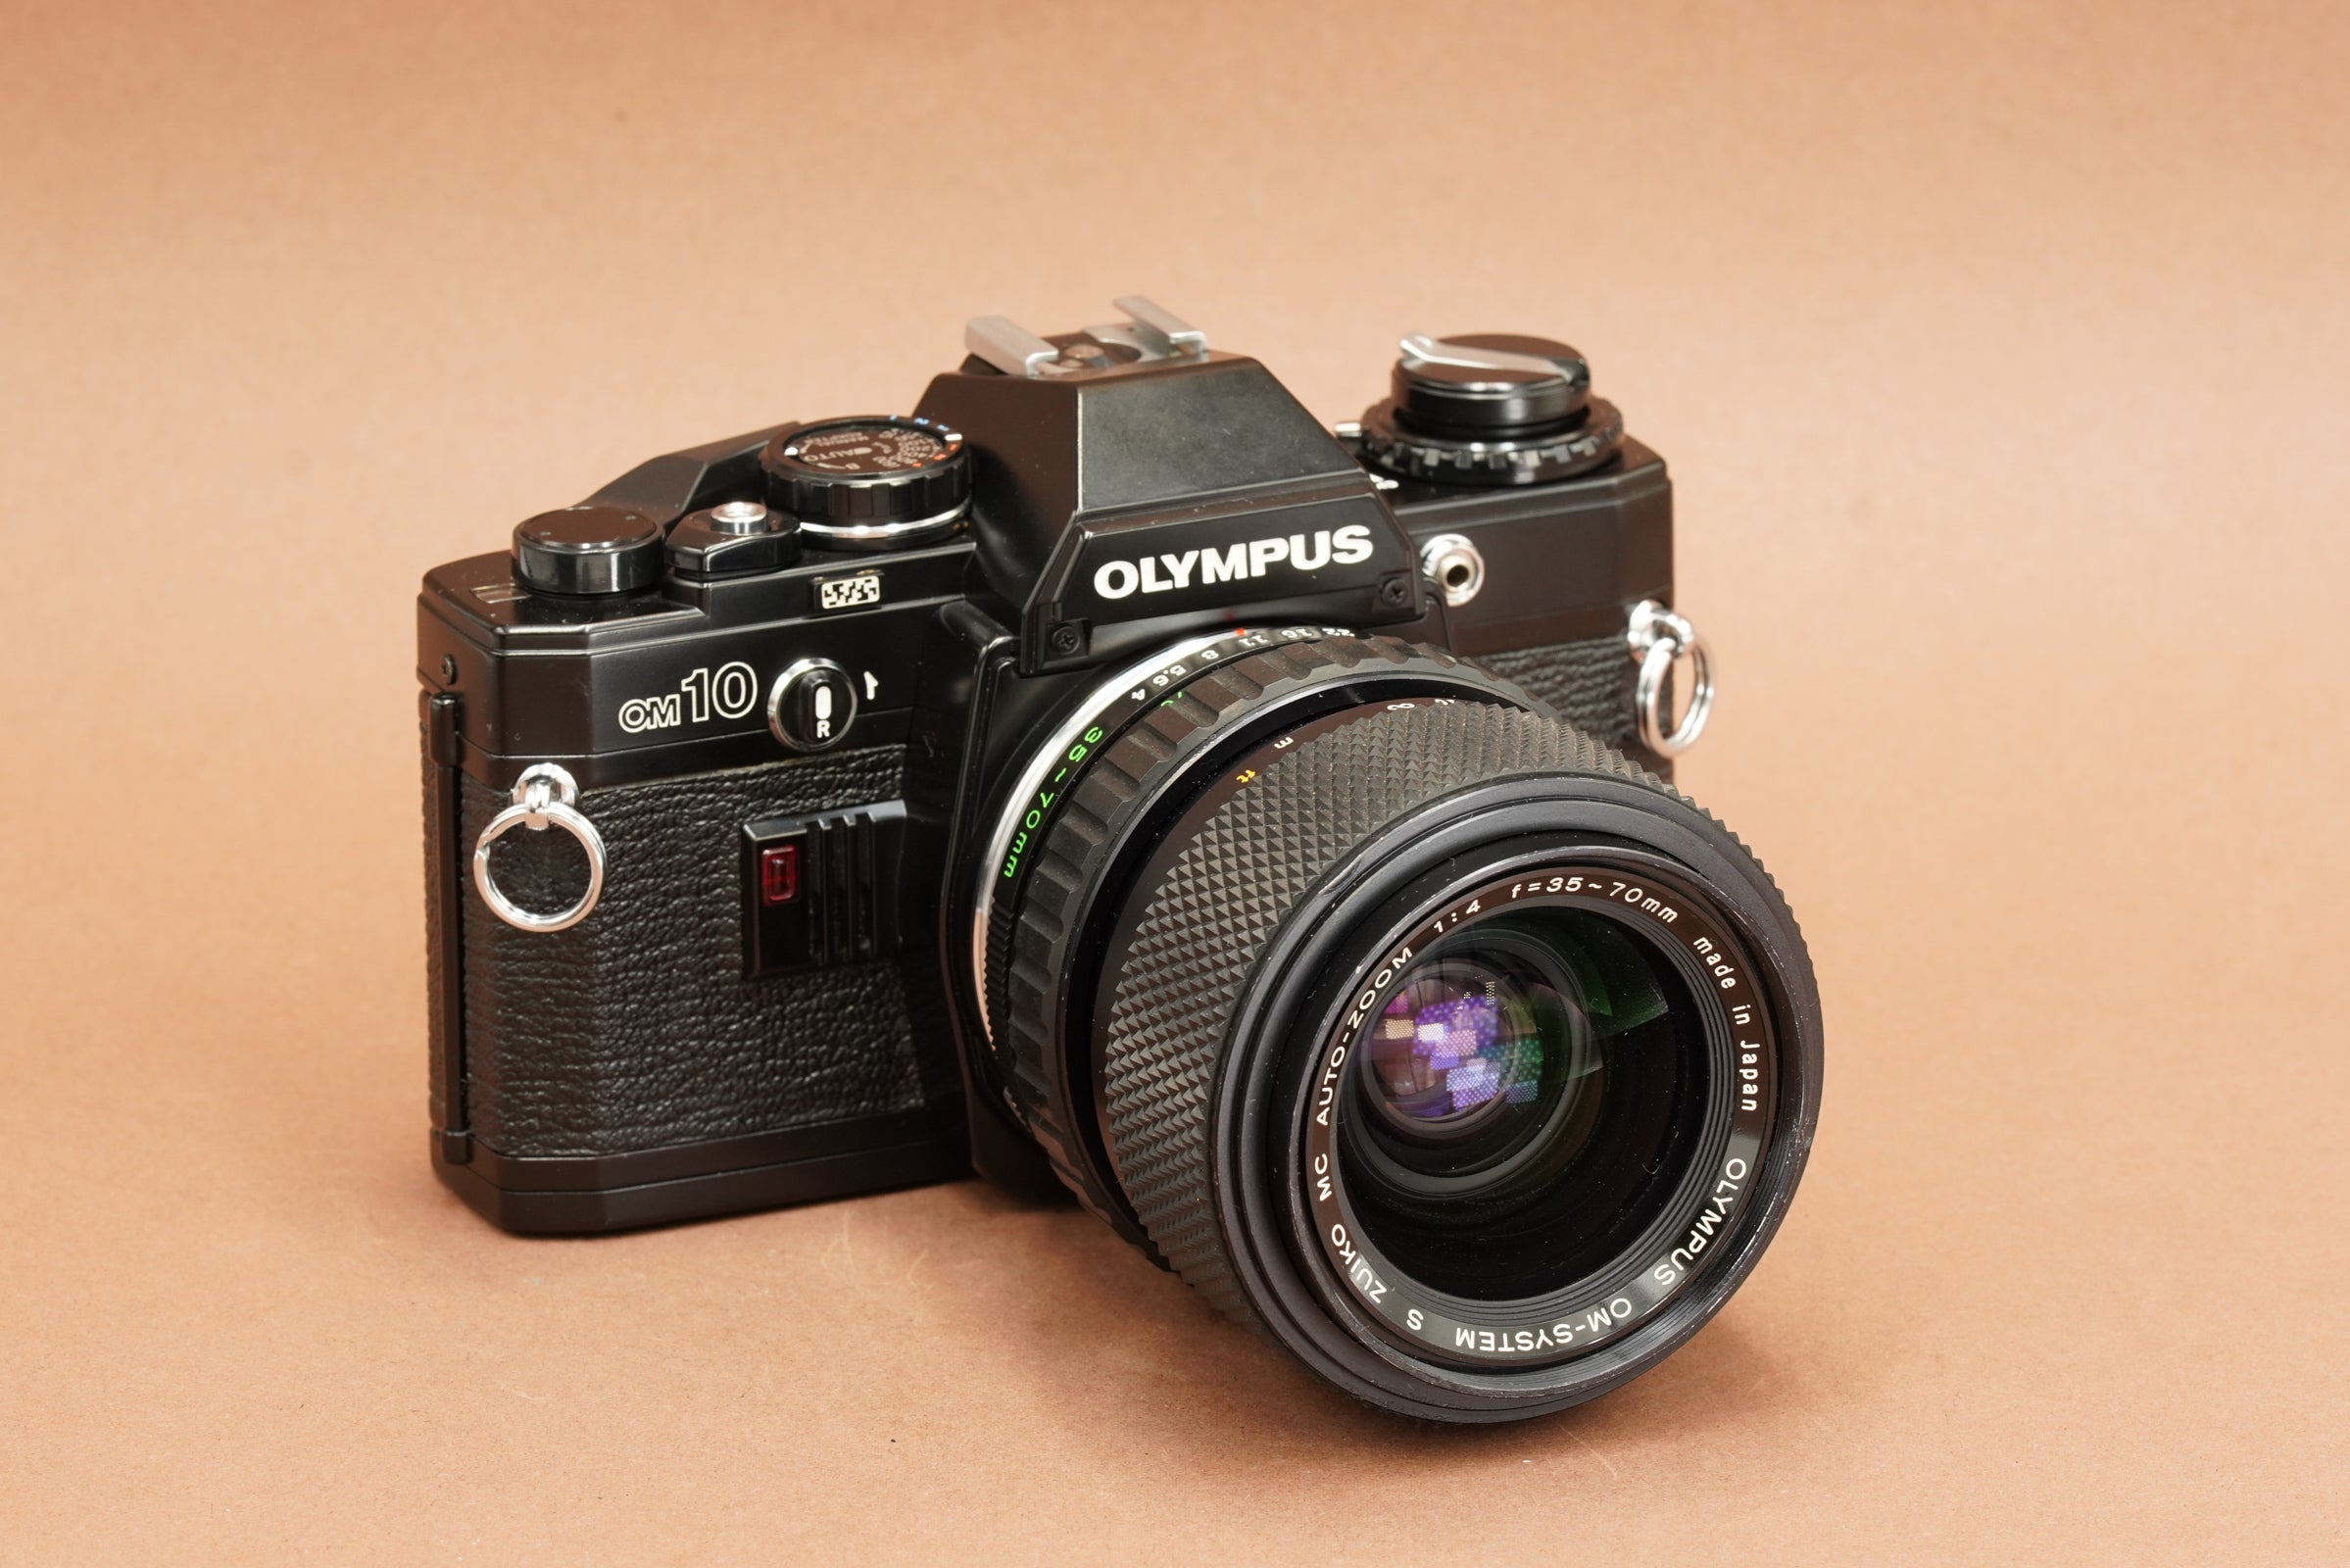 Olympus OM10, black, with lens choice